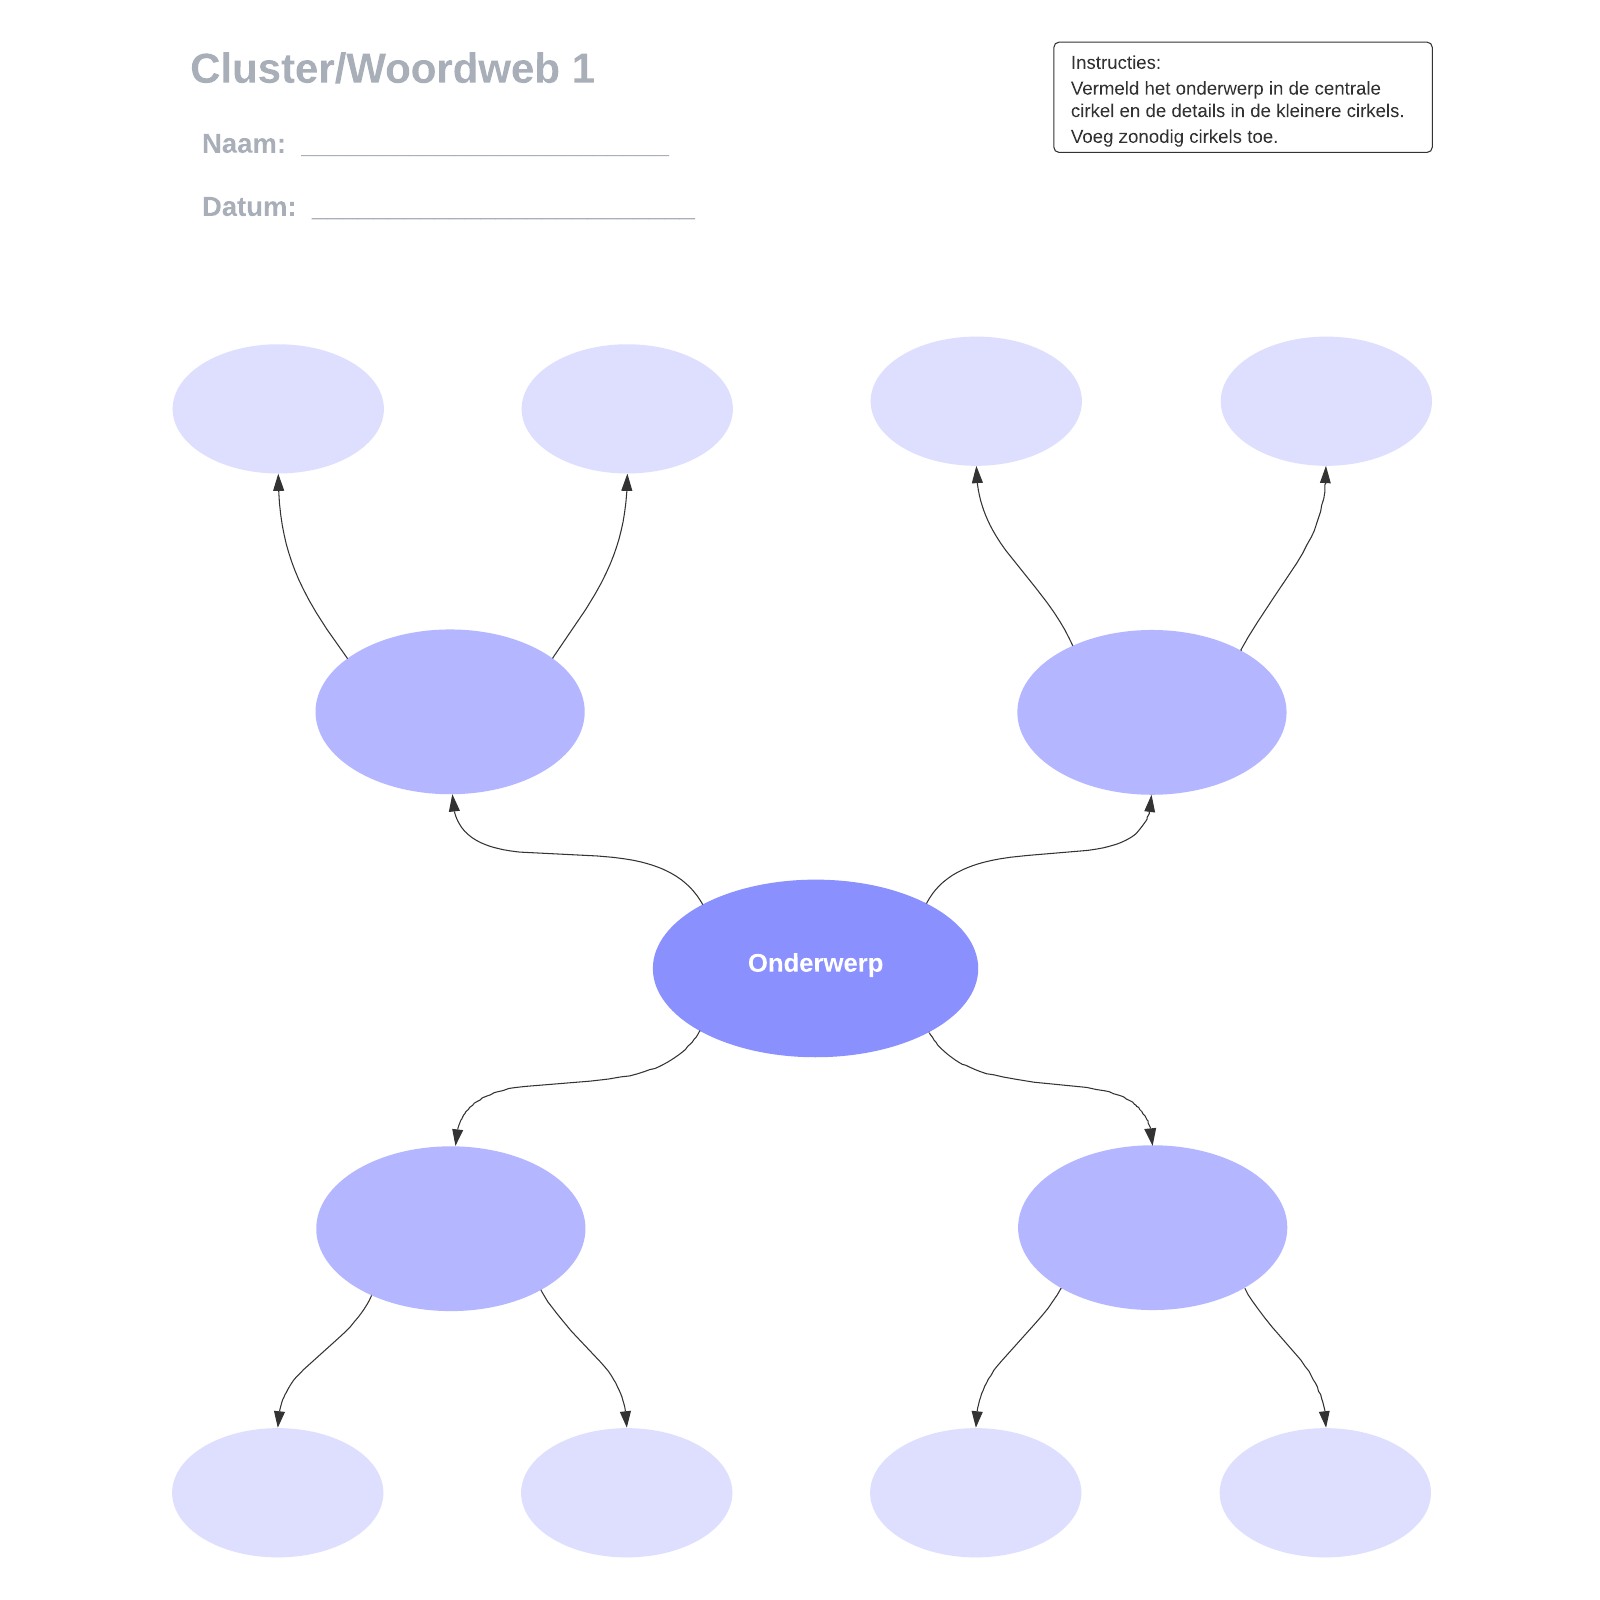 Cluster/Woordweb 1 example